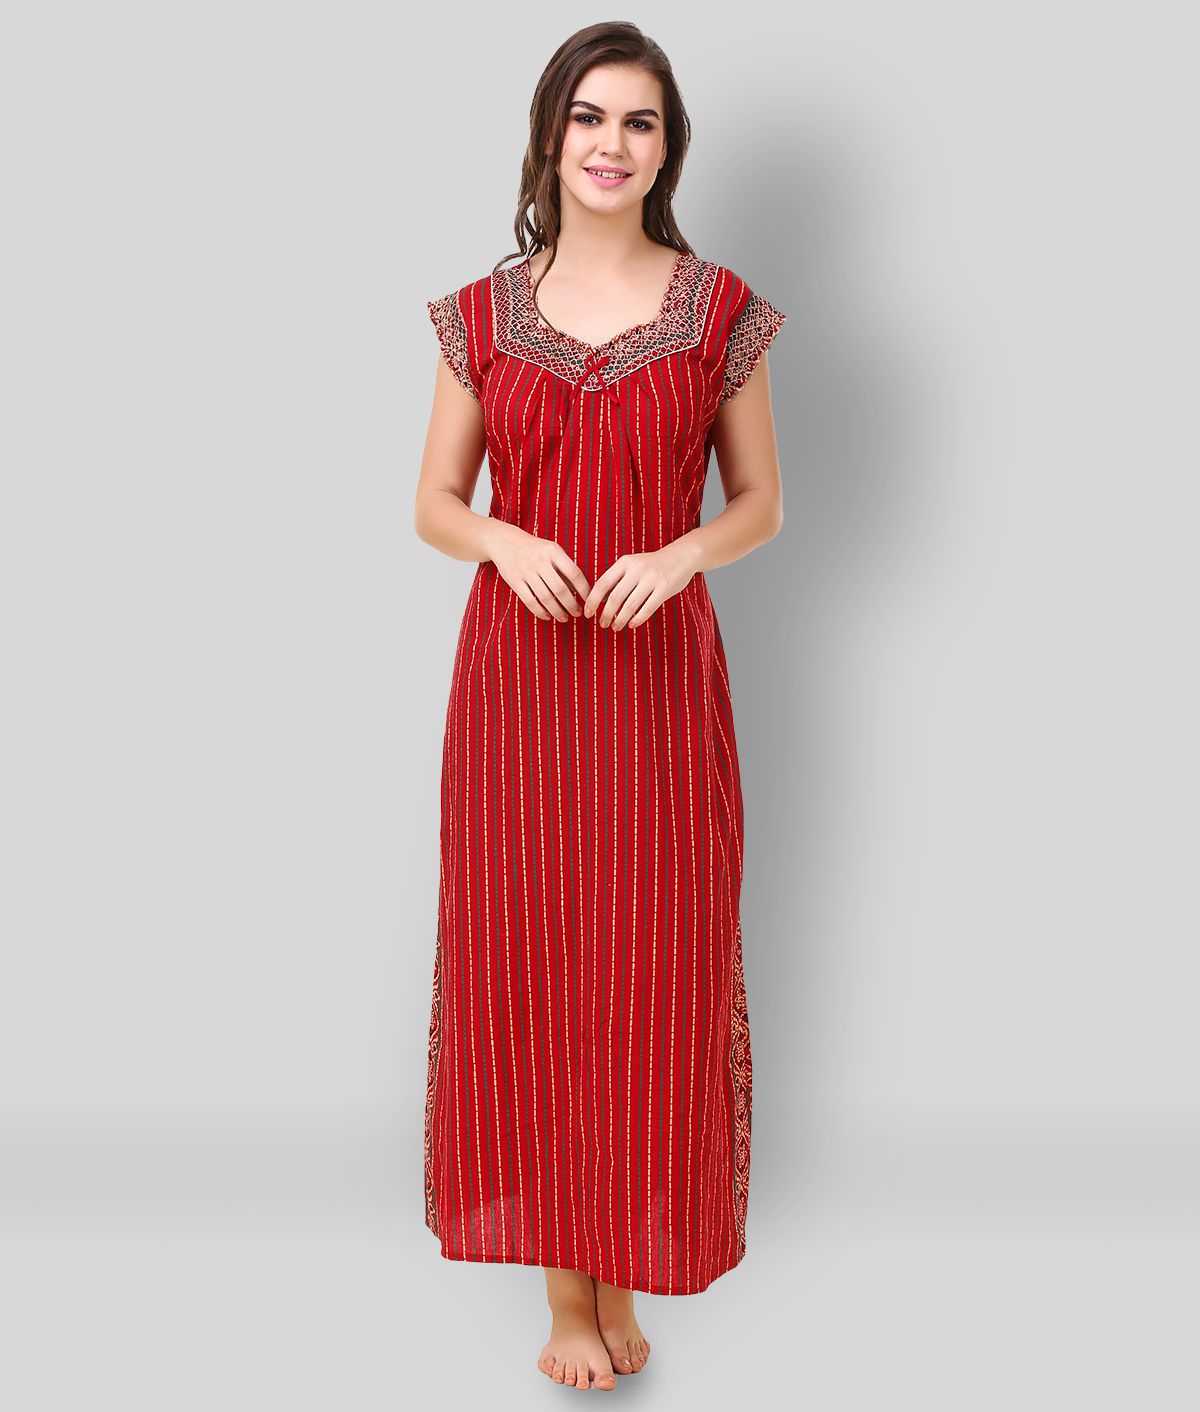     			Masha - Red Cotton Women's Nightwear Nighty & Night Gowns ( Pack of 1 )